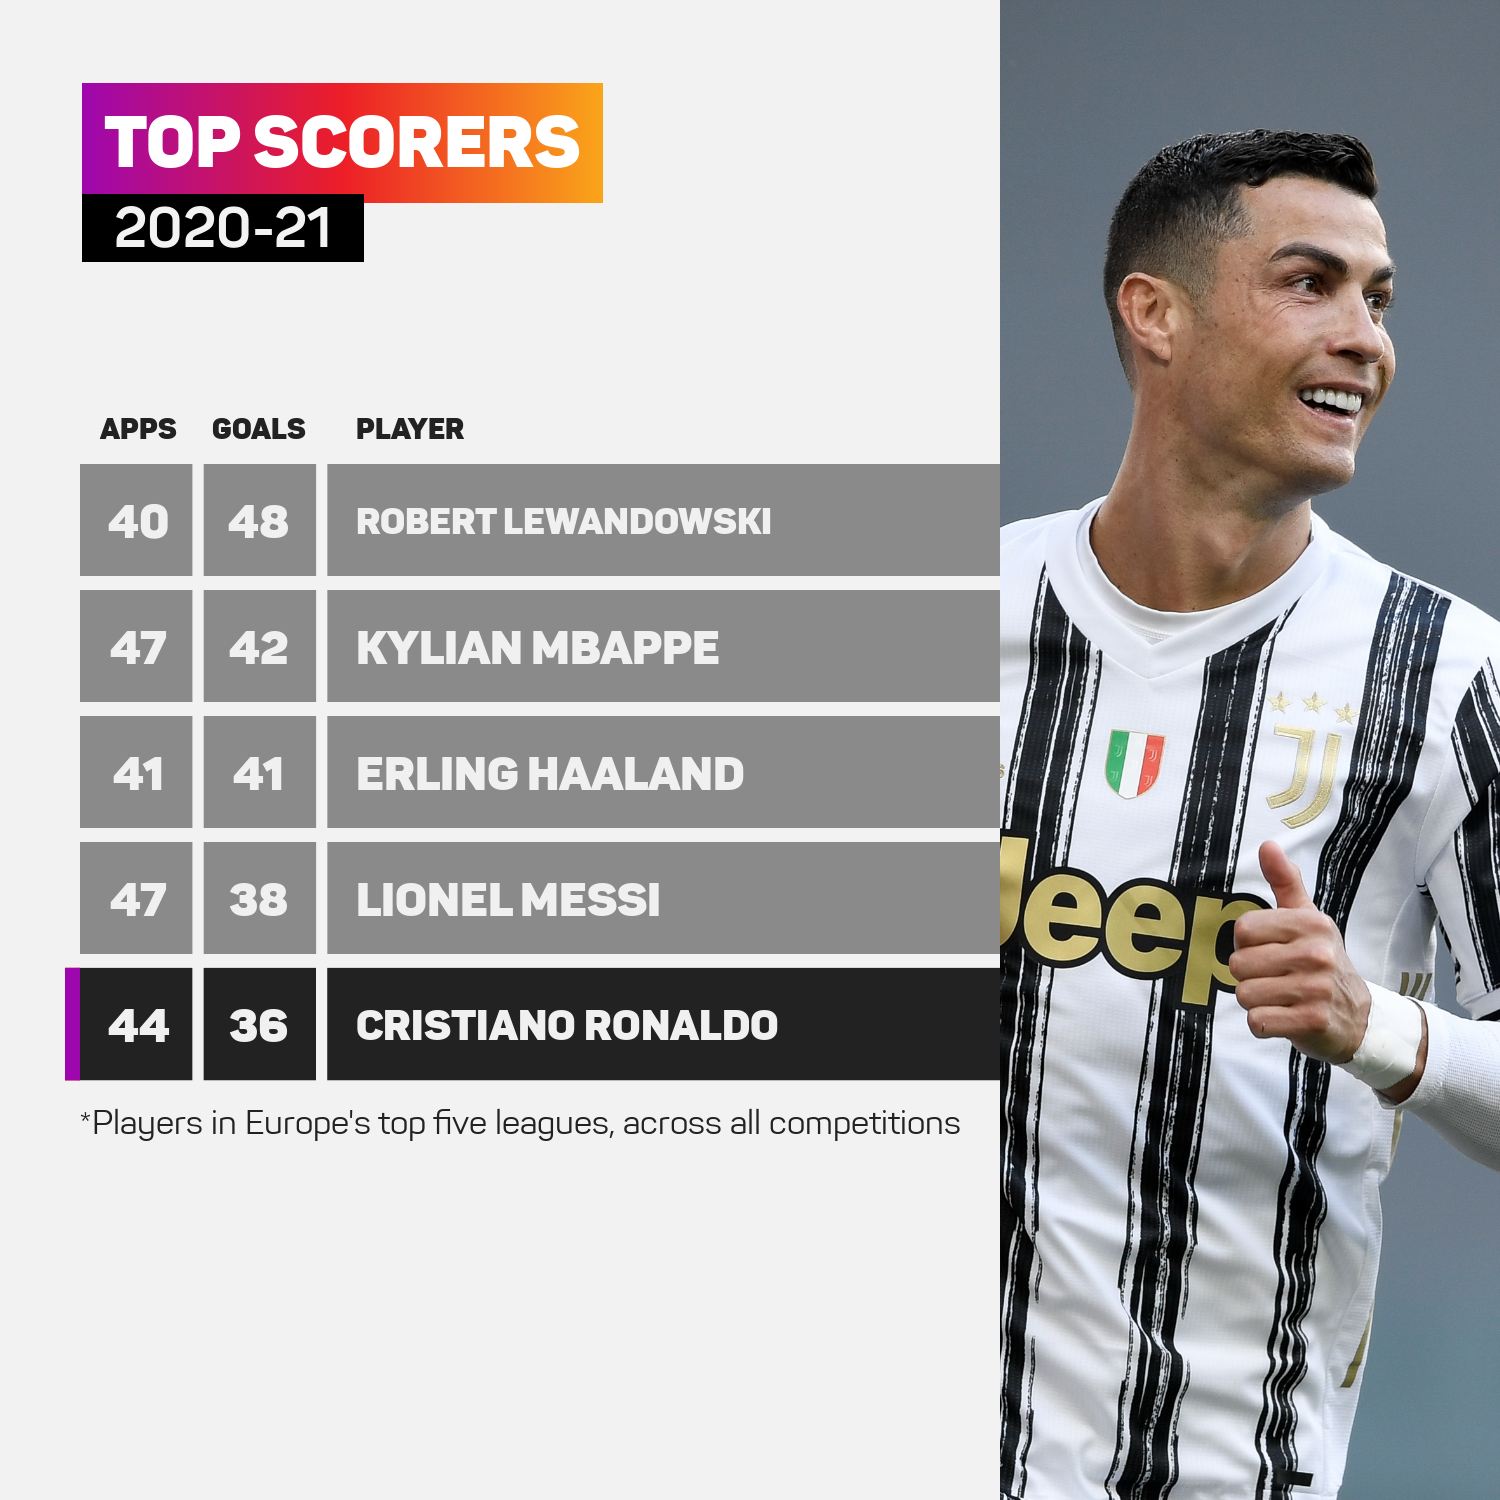 No other Juventus player came close to match Cristiano Ronaldo's goal tally last season